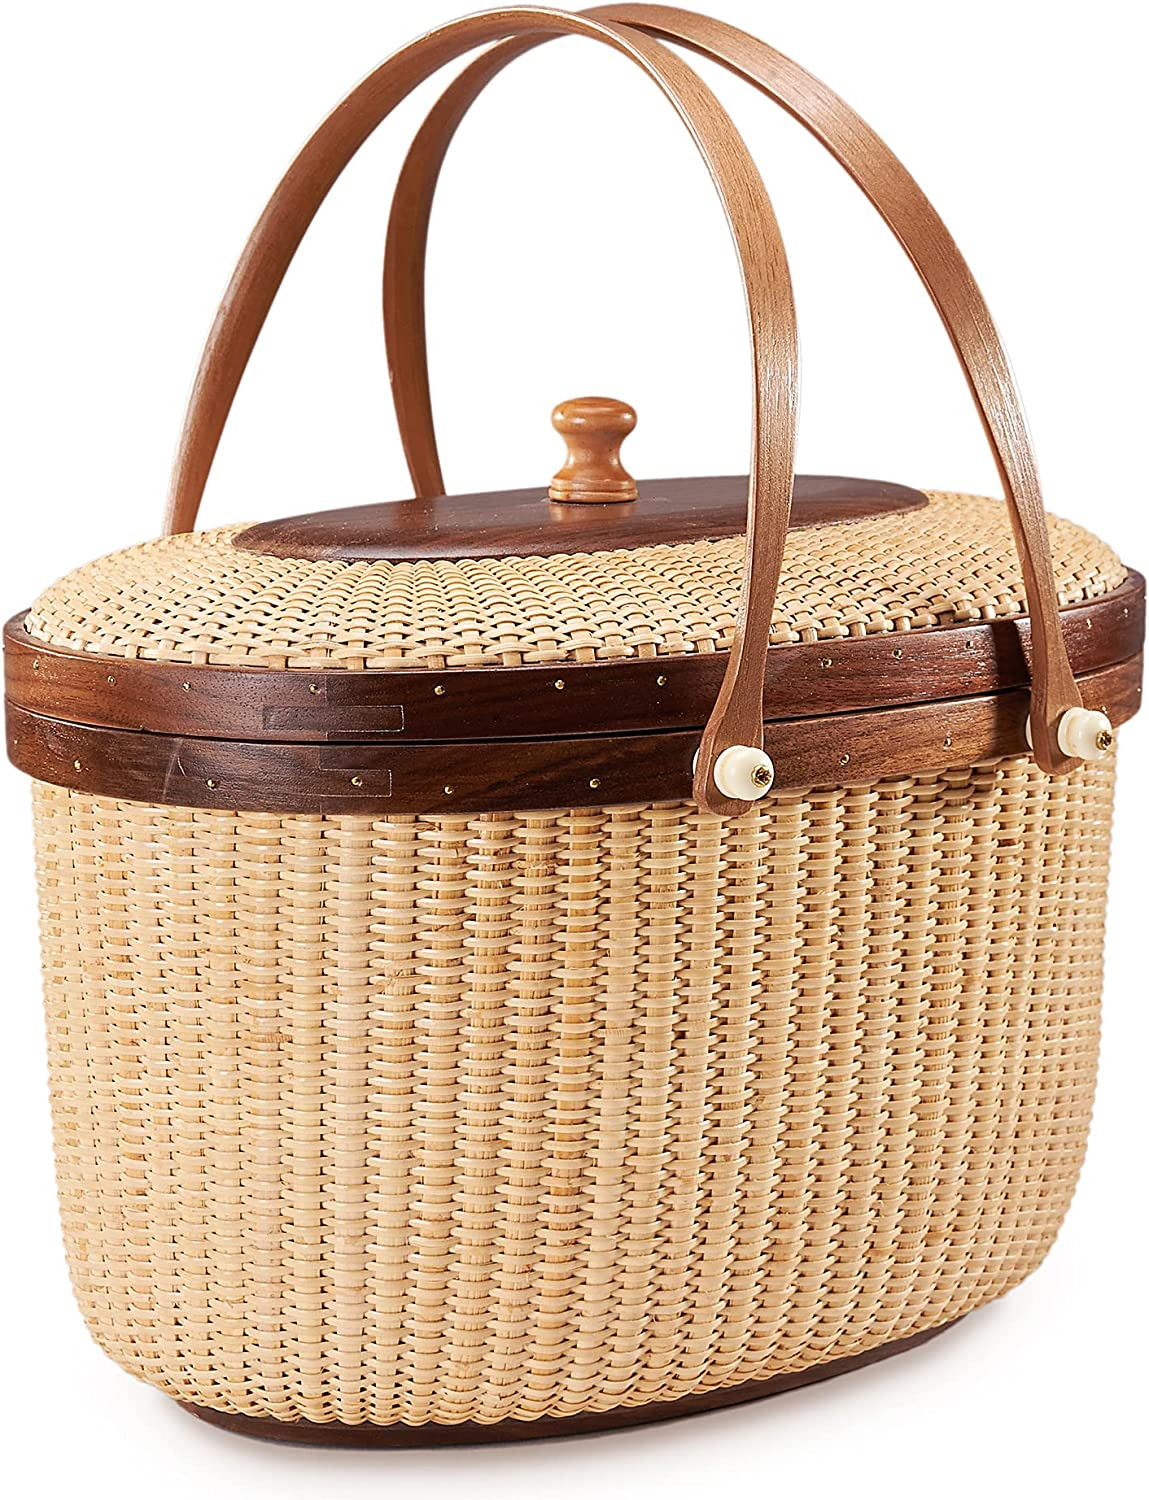 Nantucket Basket Picnic Basket Rattan Handmade Products Woven Sewing Kit Storage